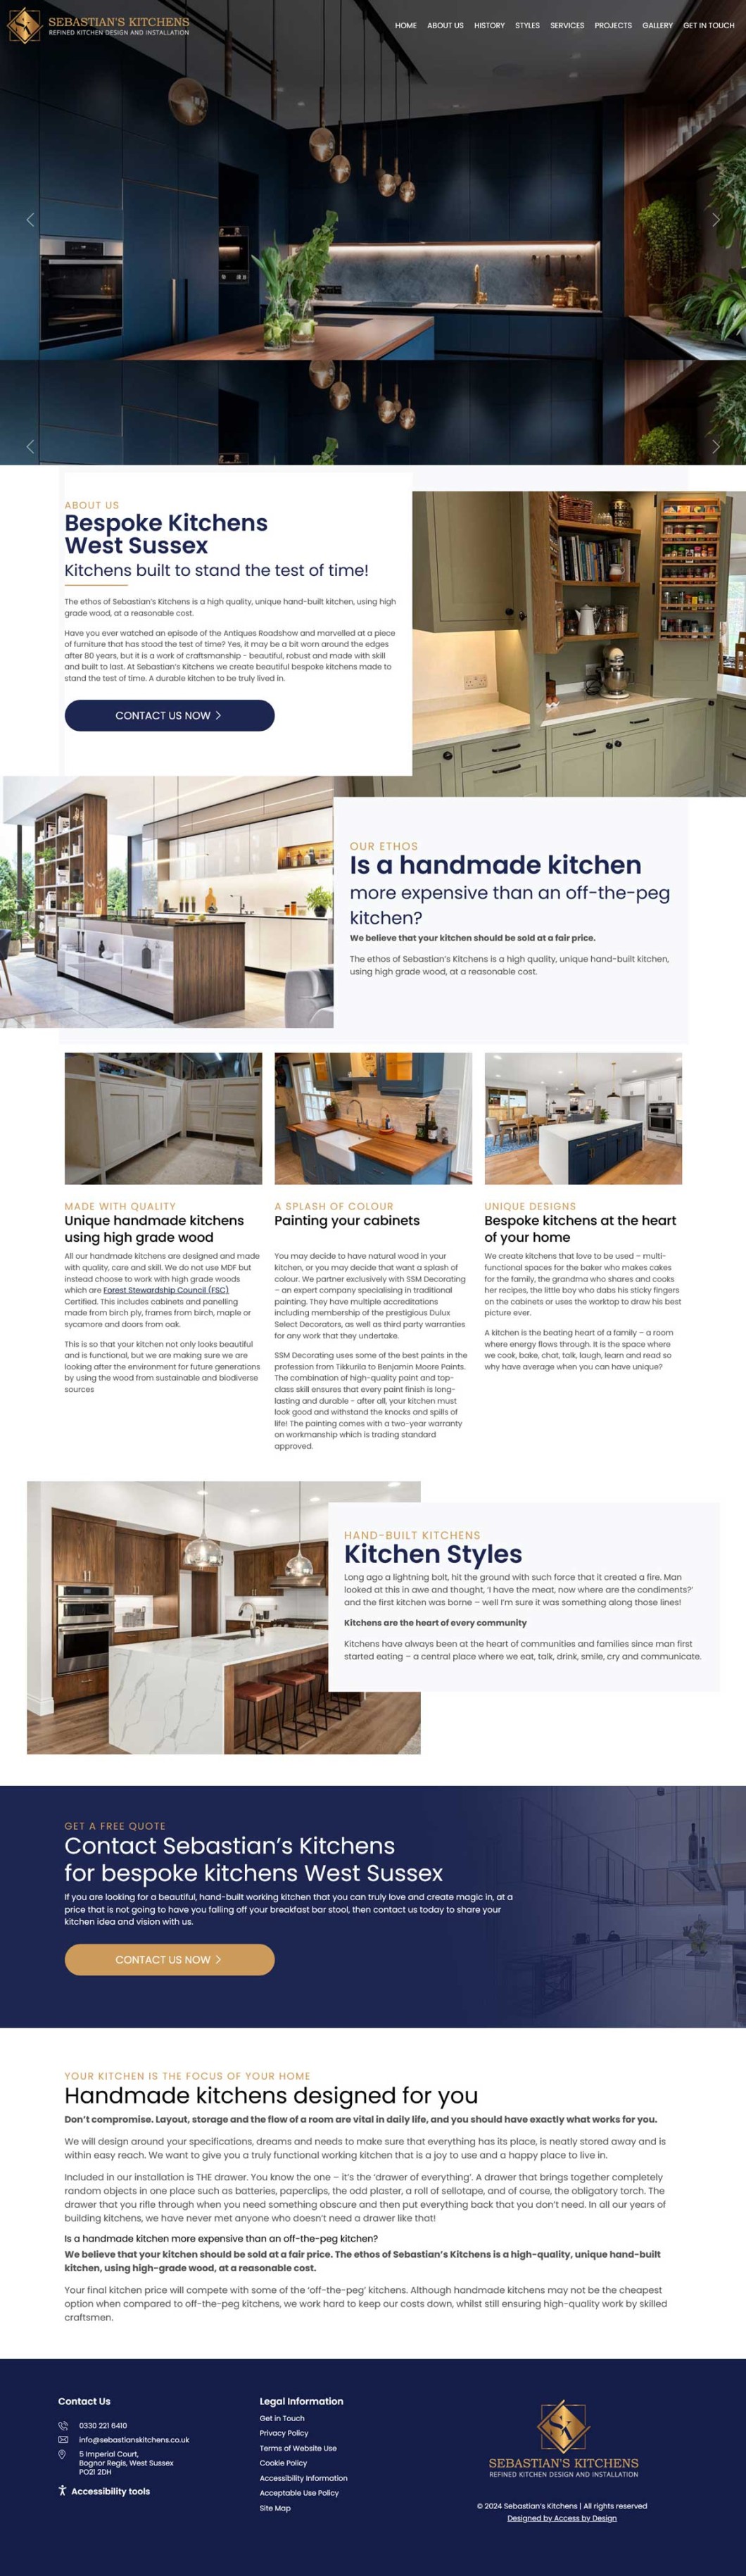 Home page of Sebastien's Kitchens website